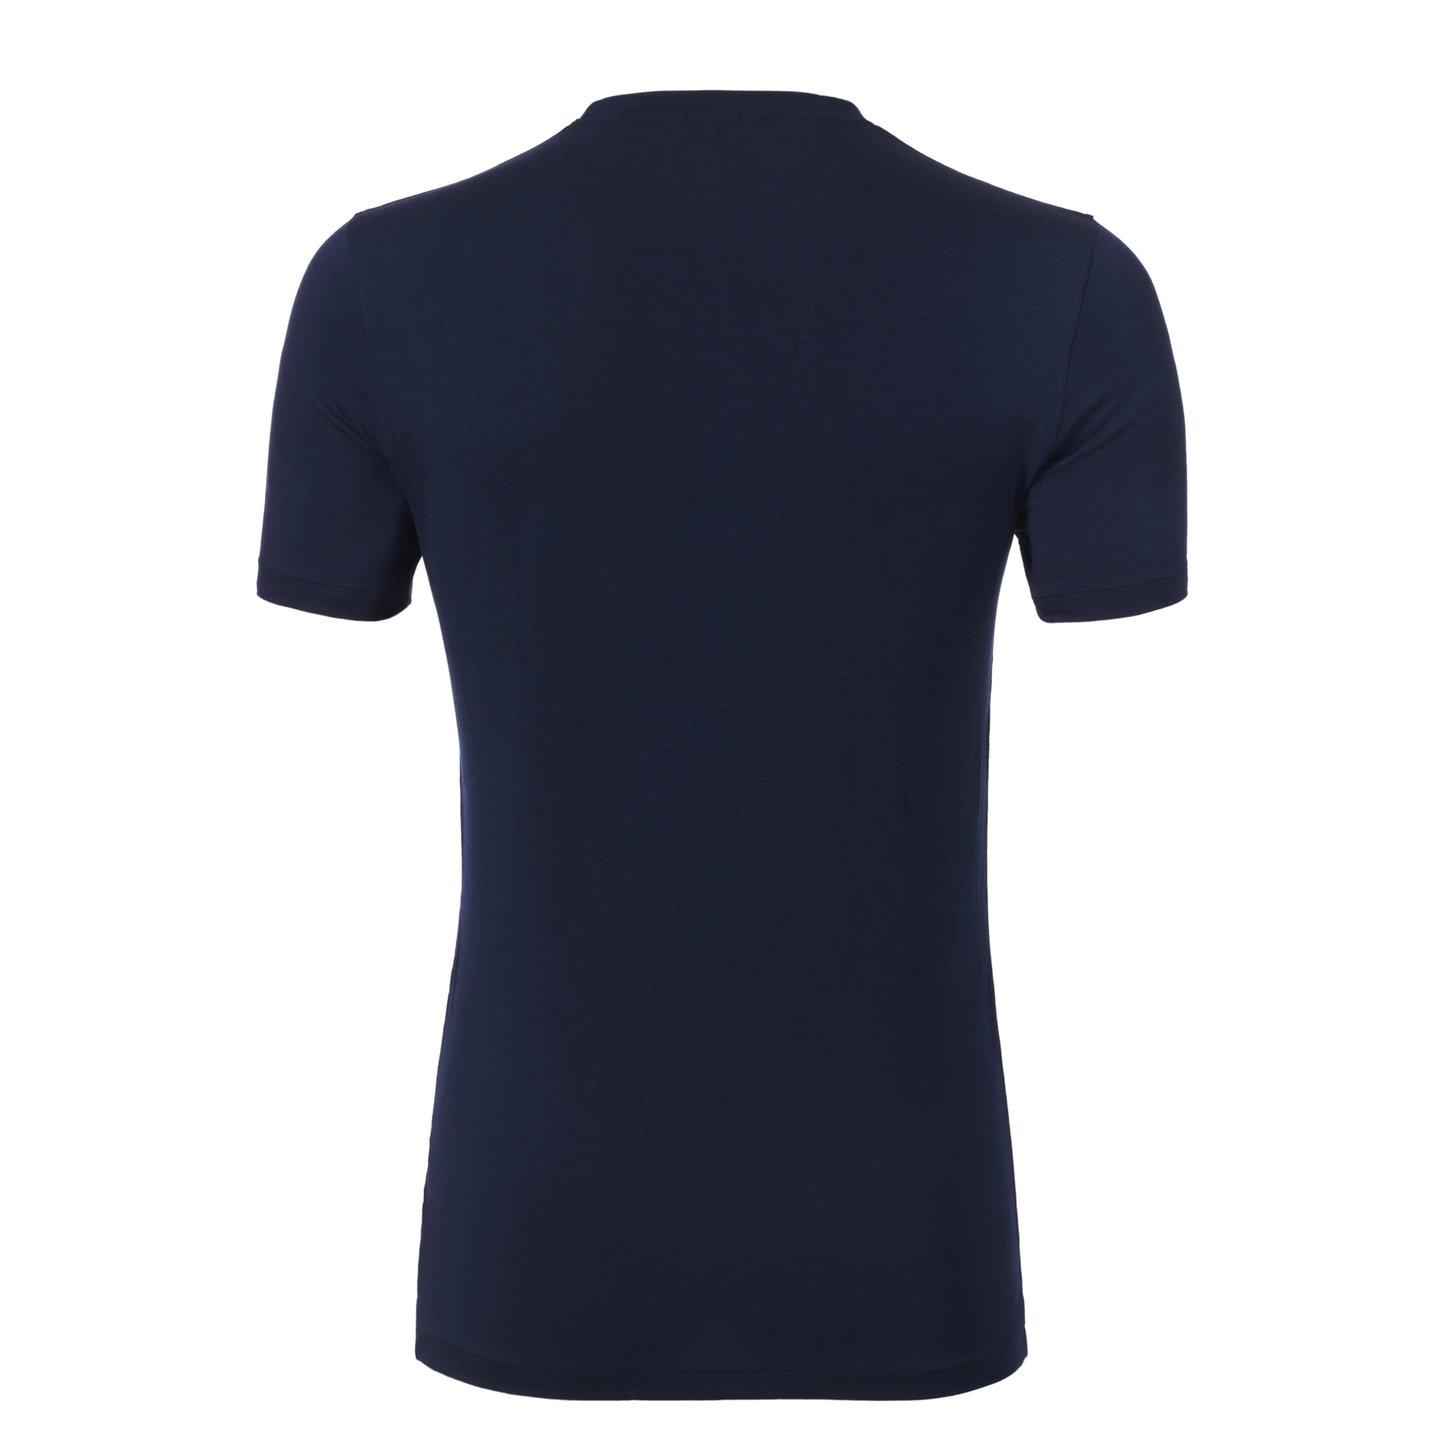 Crew-Neck T-Shirt in Navy Blue